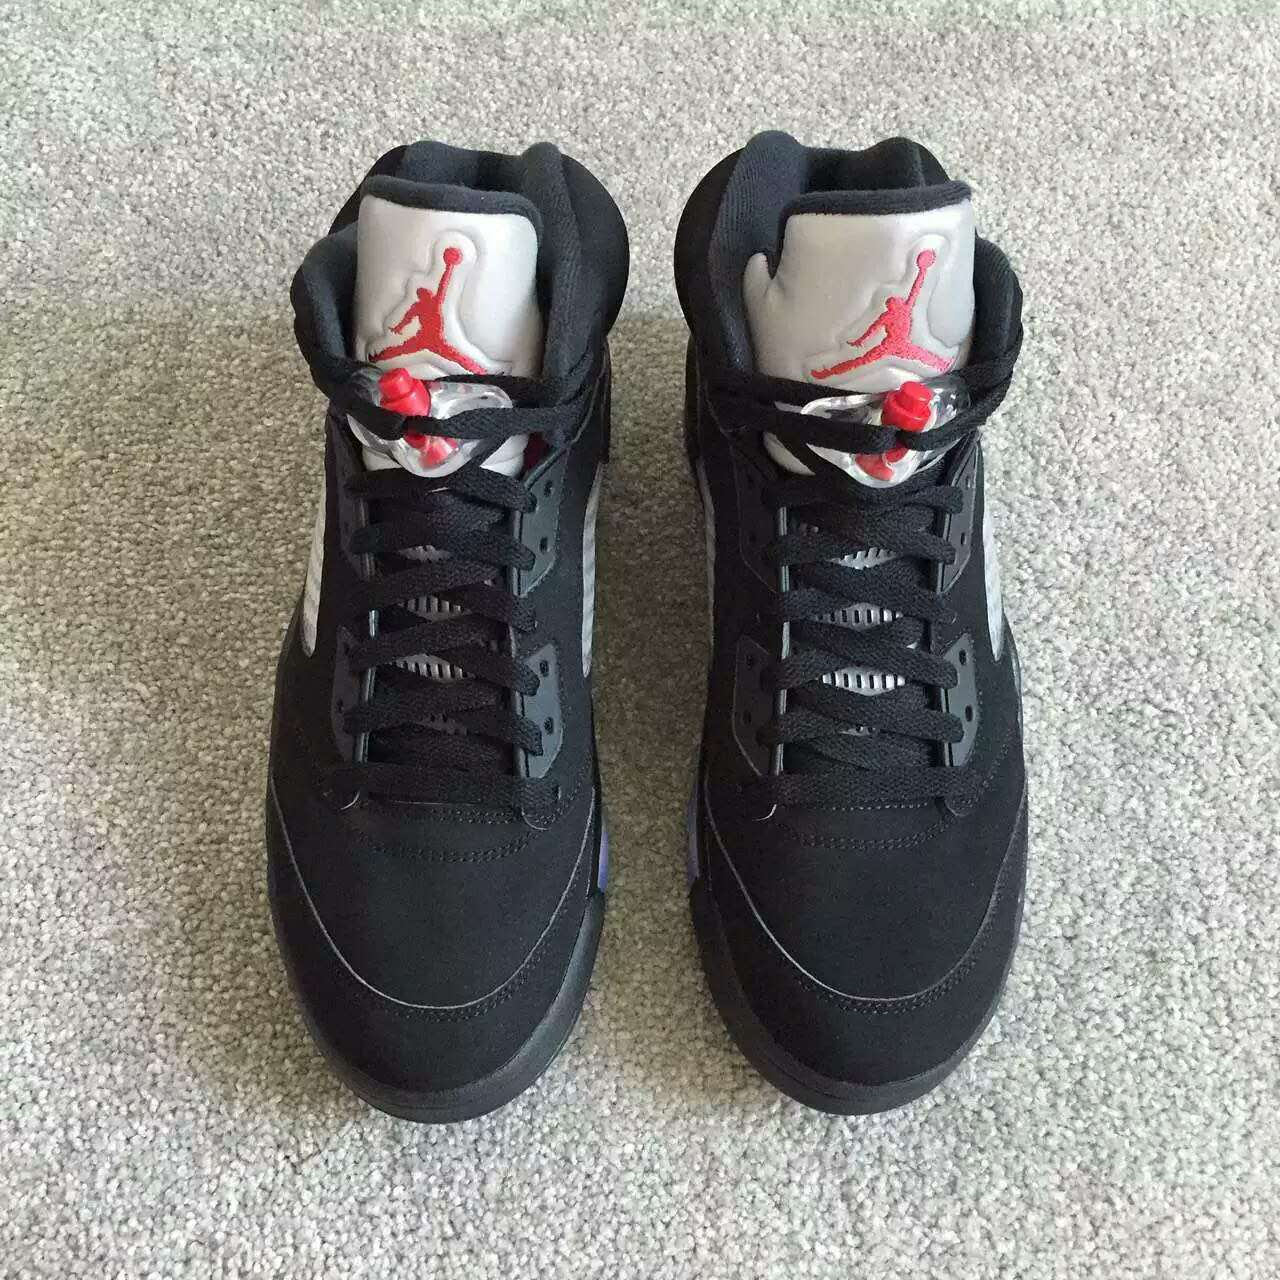 Air Jordan乔丹系列有哪些经典的鞋款？ - 知乎